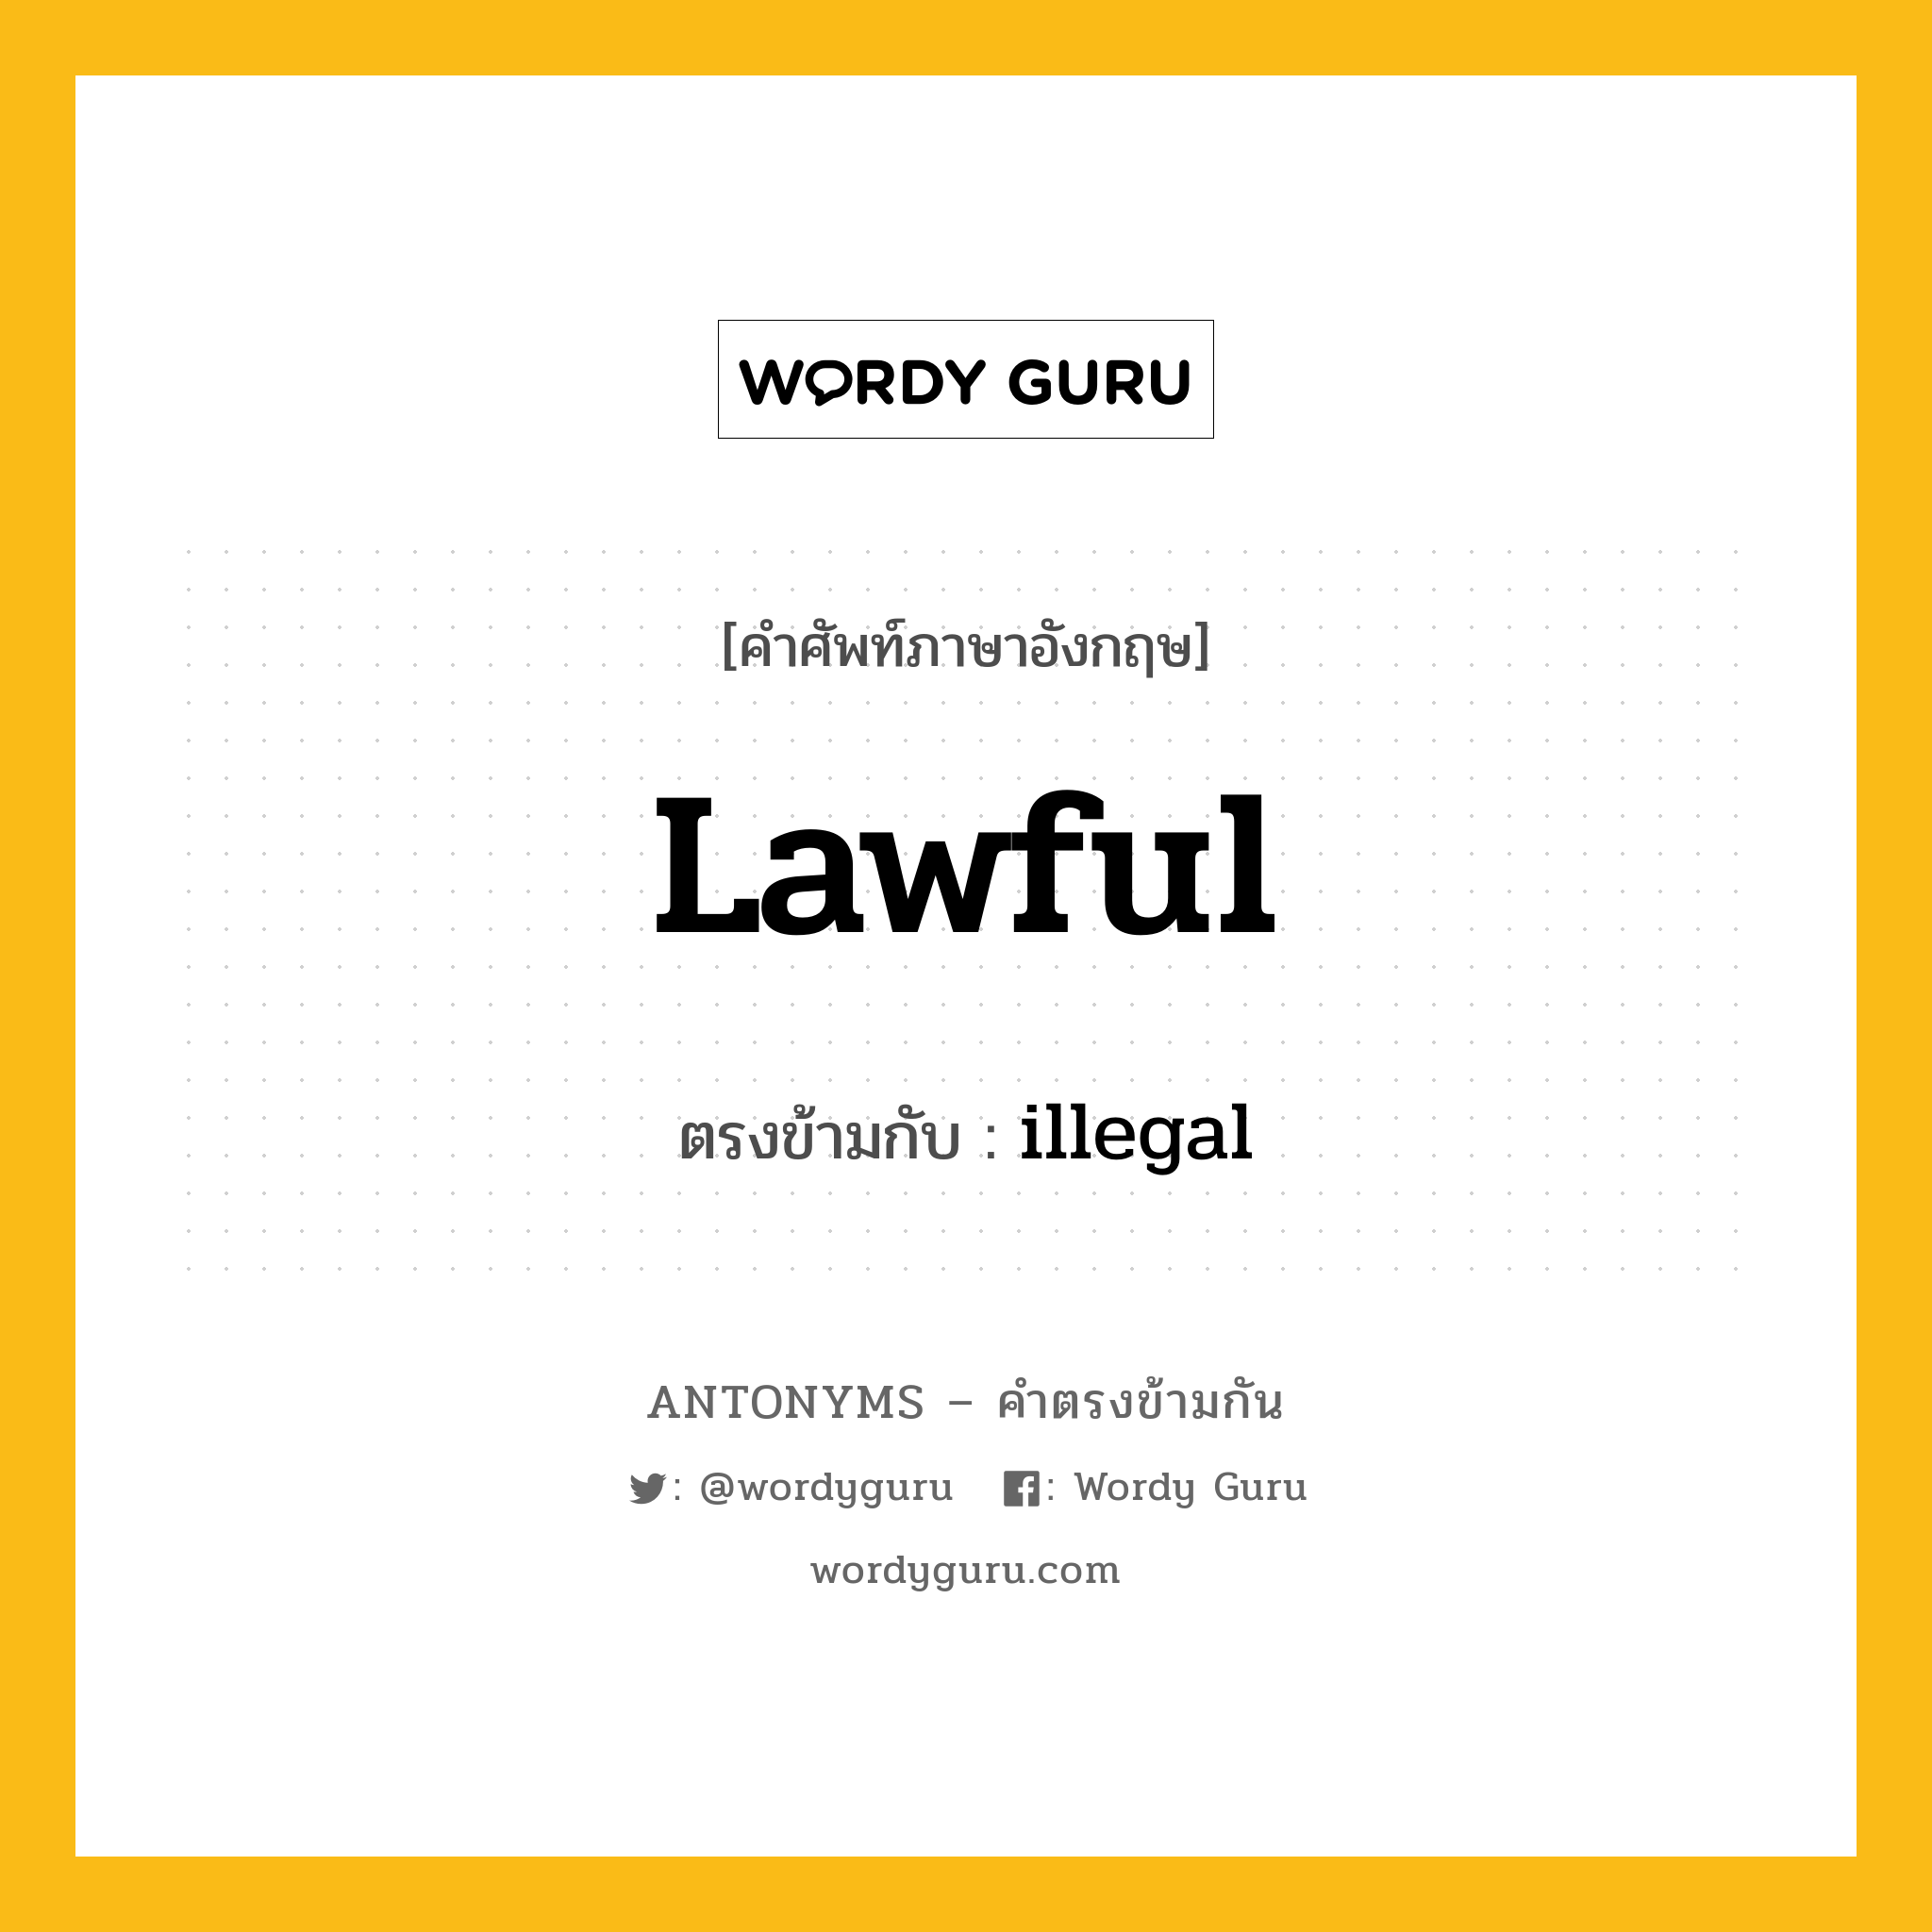 lawful เป็นคำตรงข้ามกับคำไหนบ้าง?, คำศัพท์ภาษาอังกฤษ lawful ตรงข้ามกับ illegal หมวด illegal